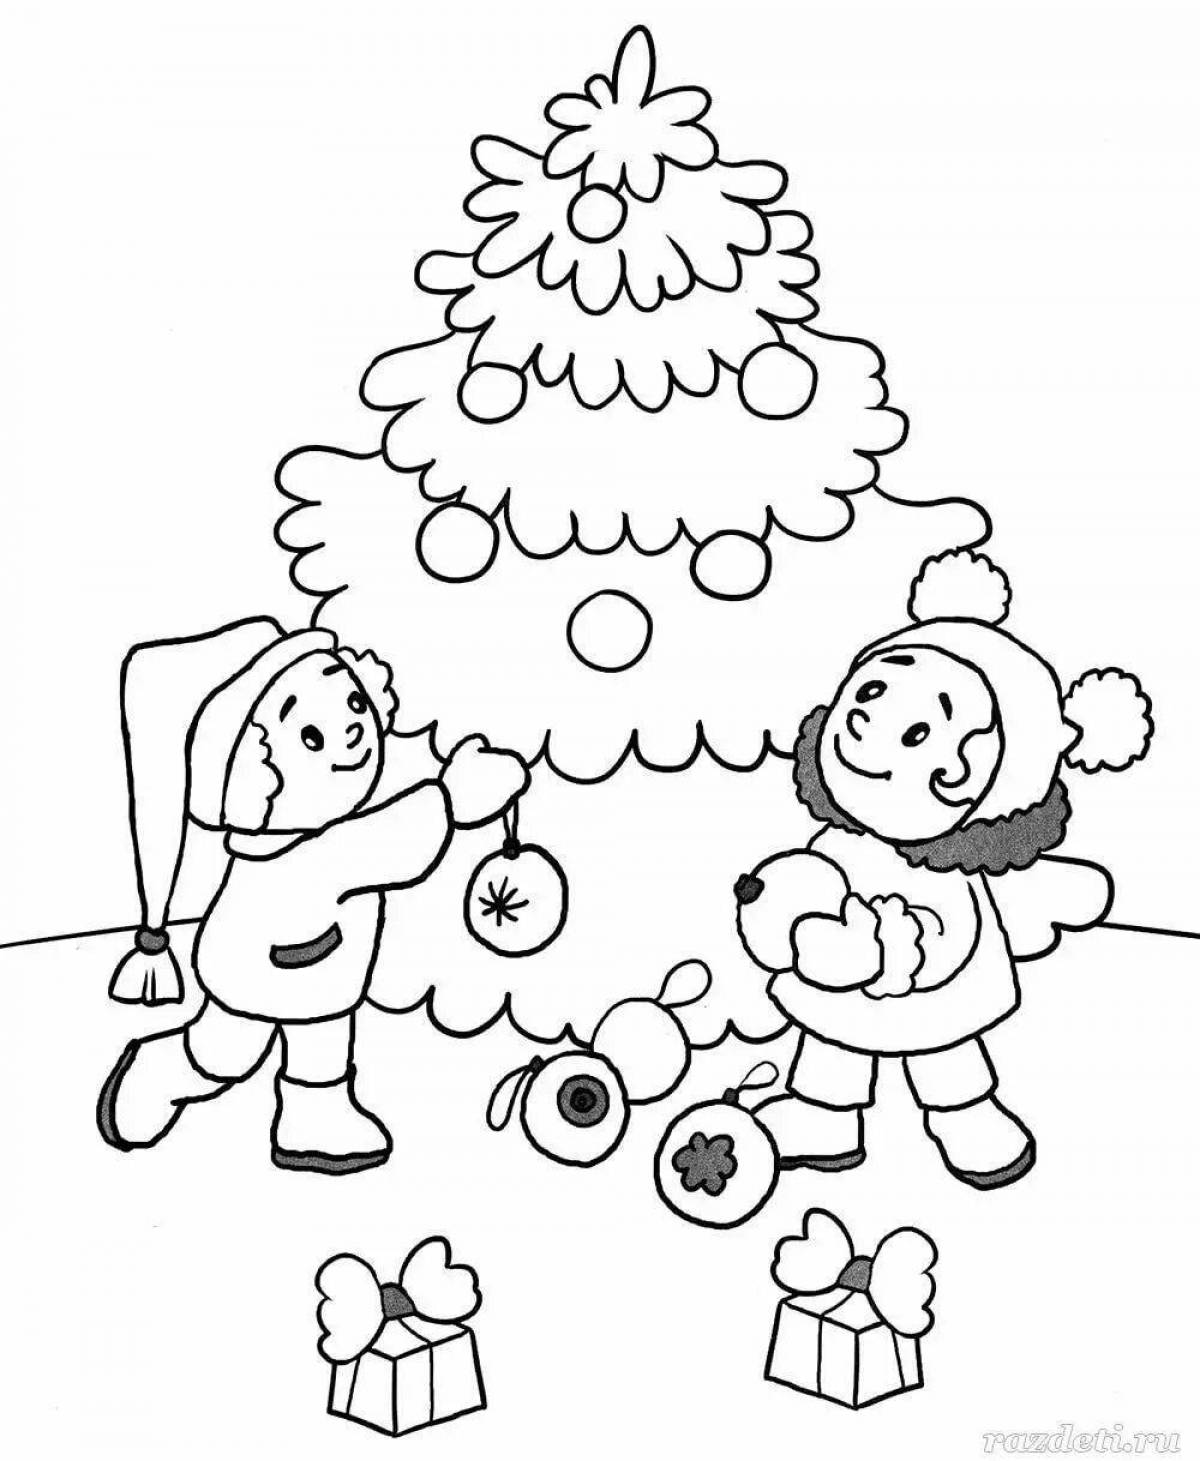 Inviting Christmas coloring games